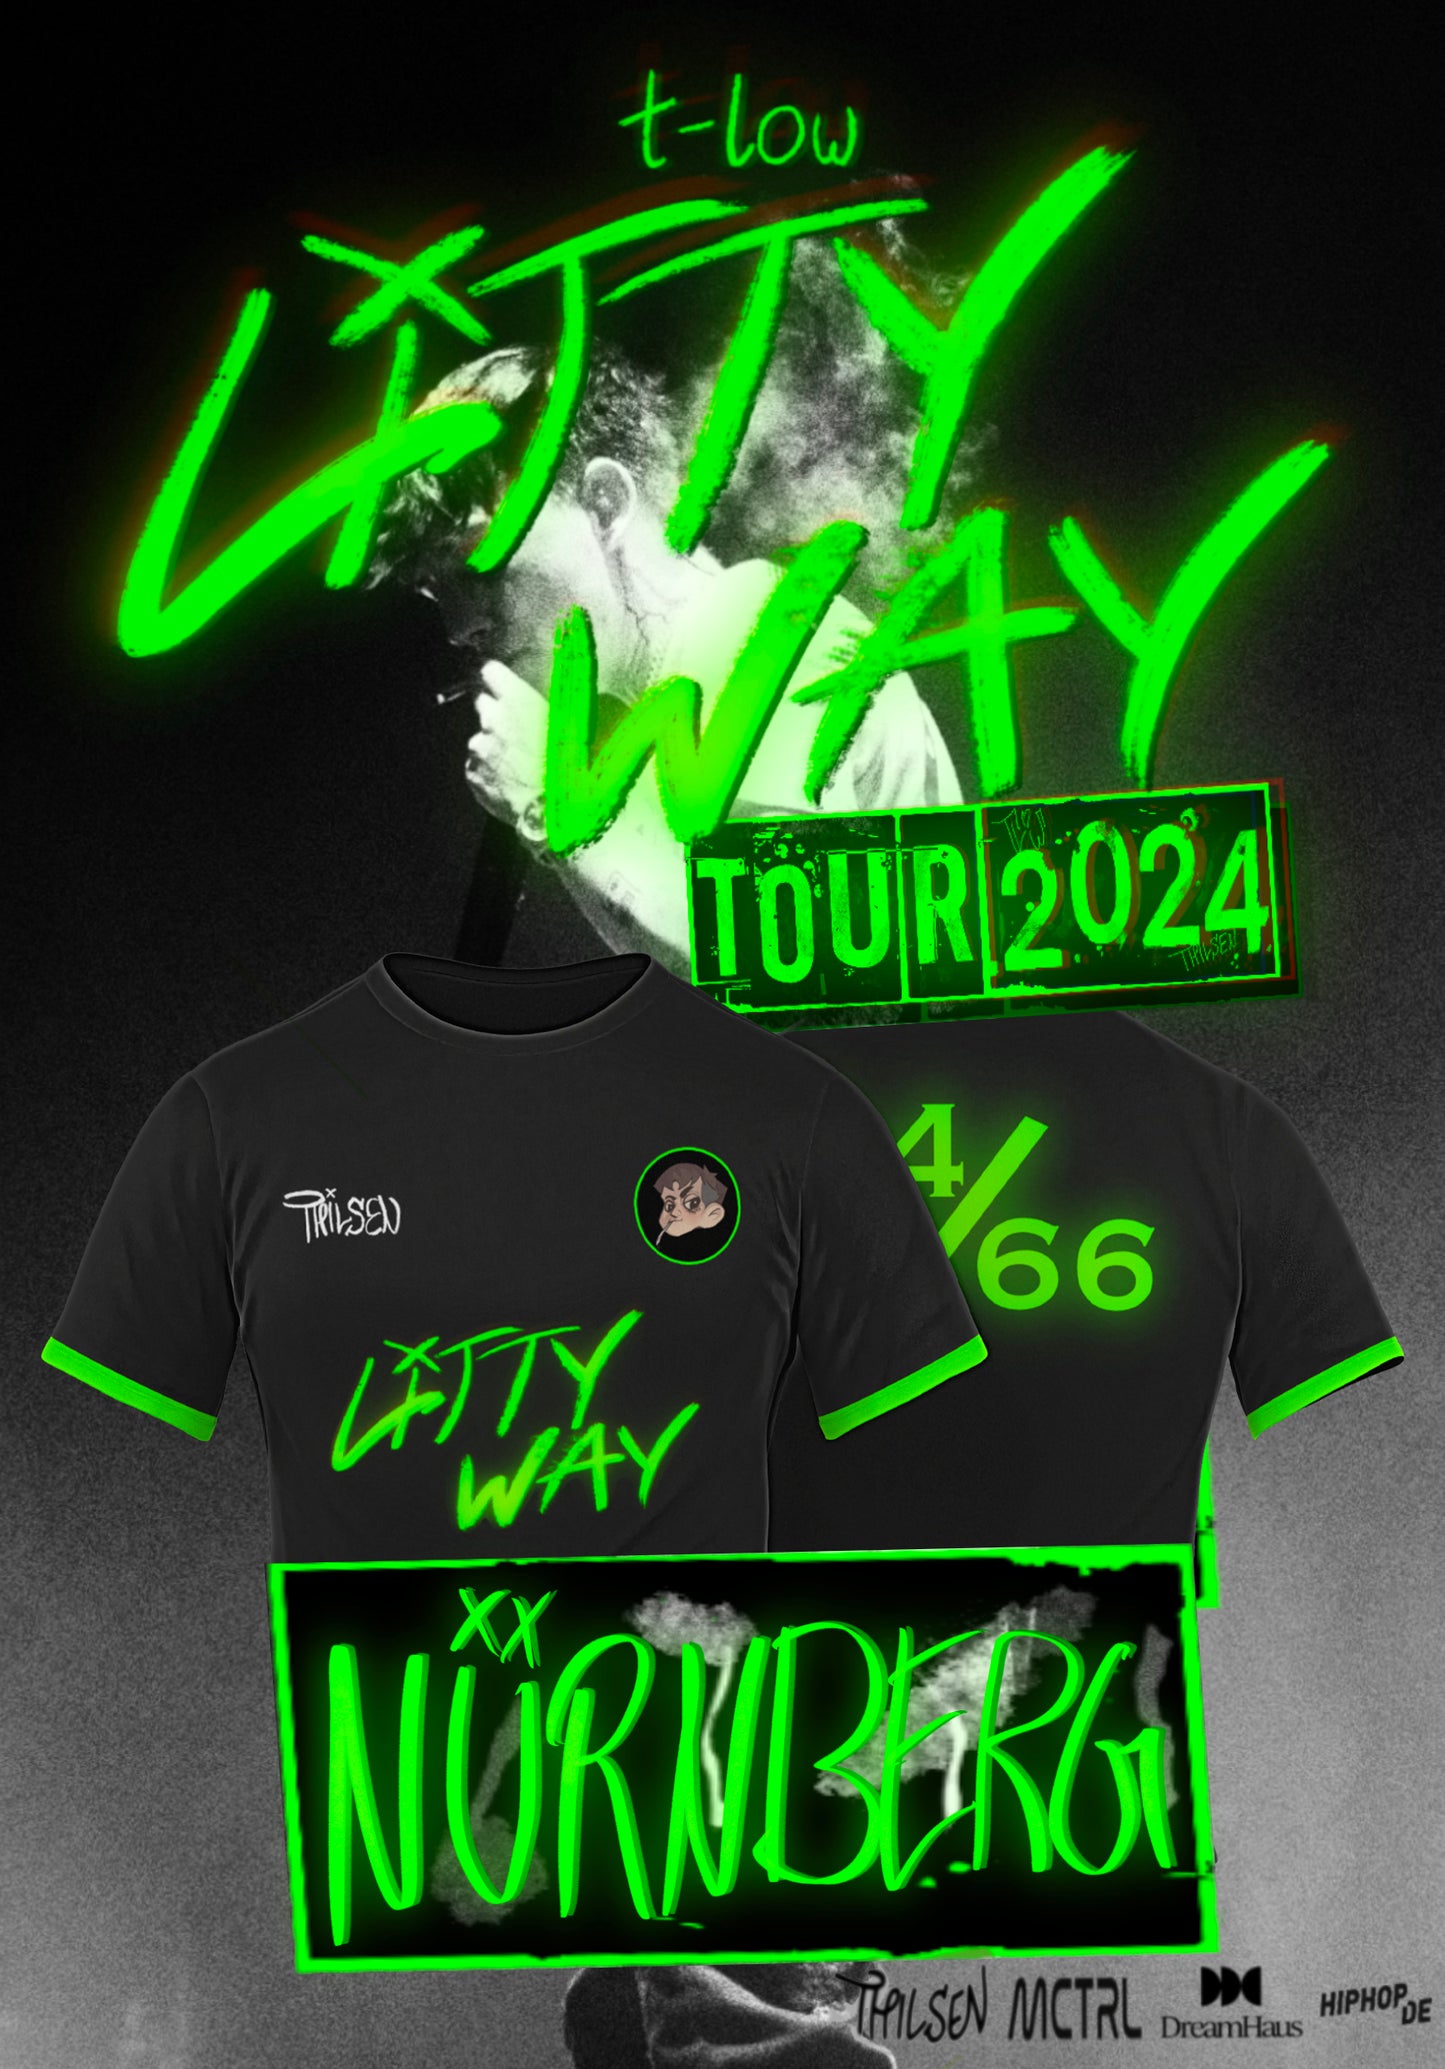 E-Ticket & Trikot Bundle - t-low Litty Way Tour 2024 Nürnberg